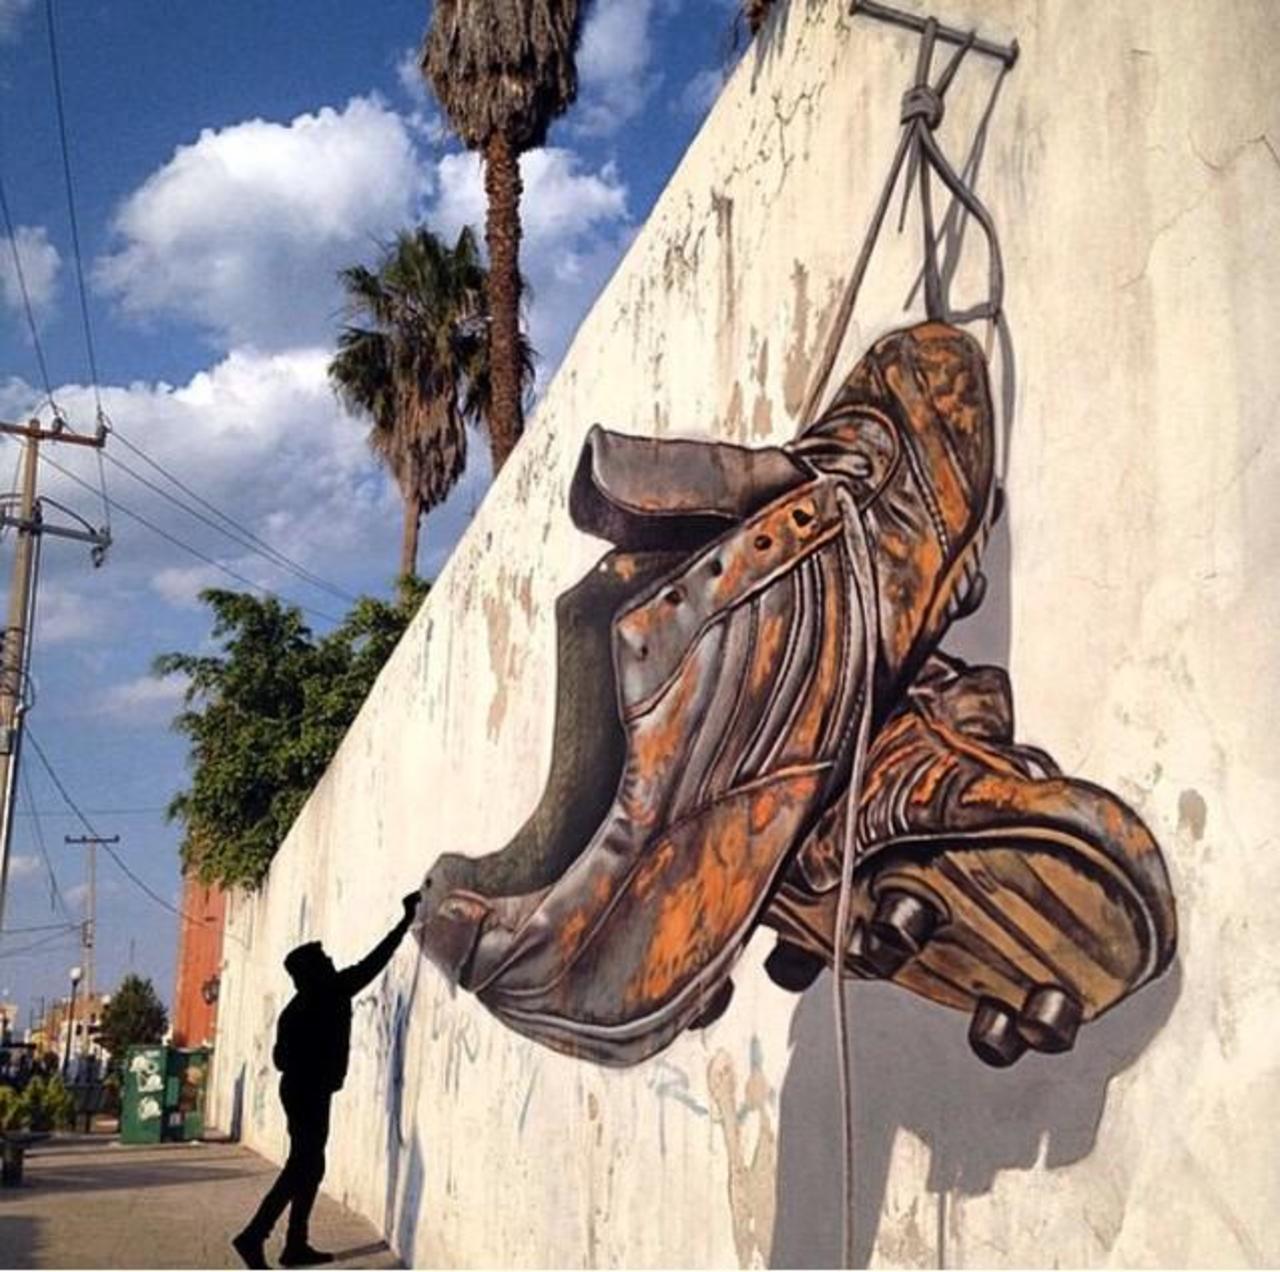 Awesome anamorphic 3D Street Art by Juandres Vera 

#art #graffiti #mural #streetart http://t.co/YIInjeDku2